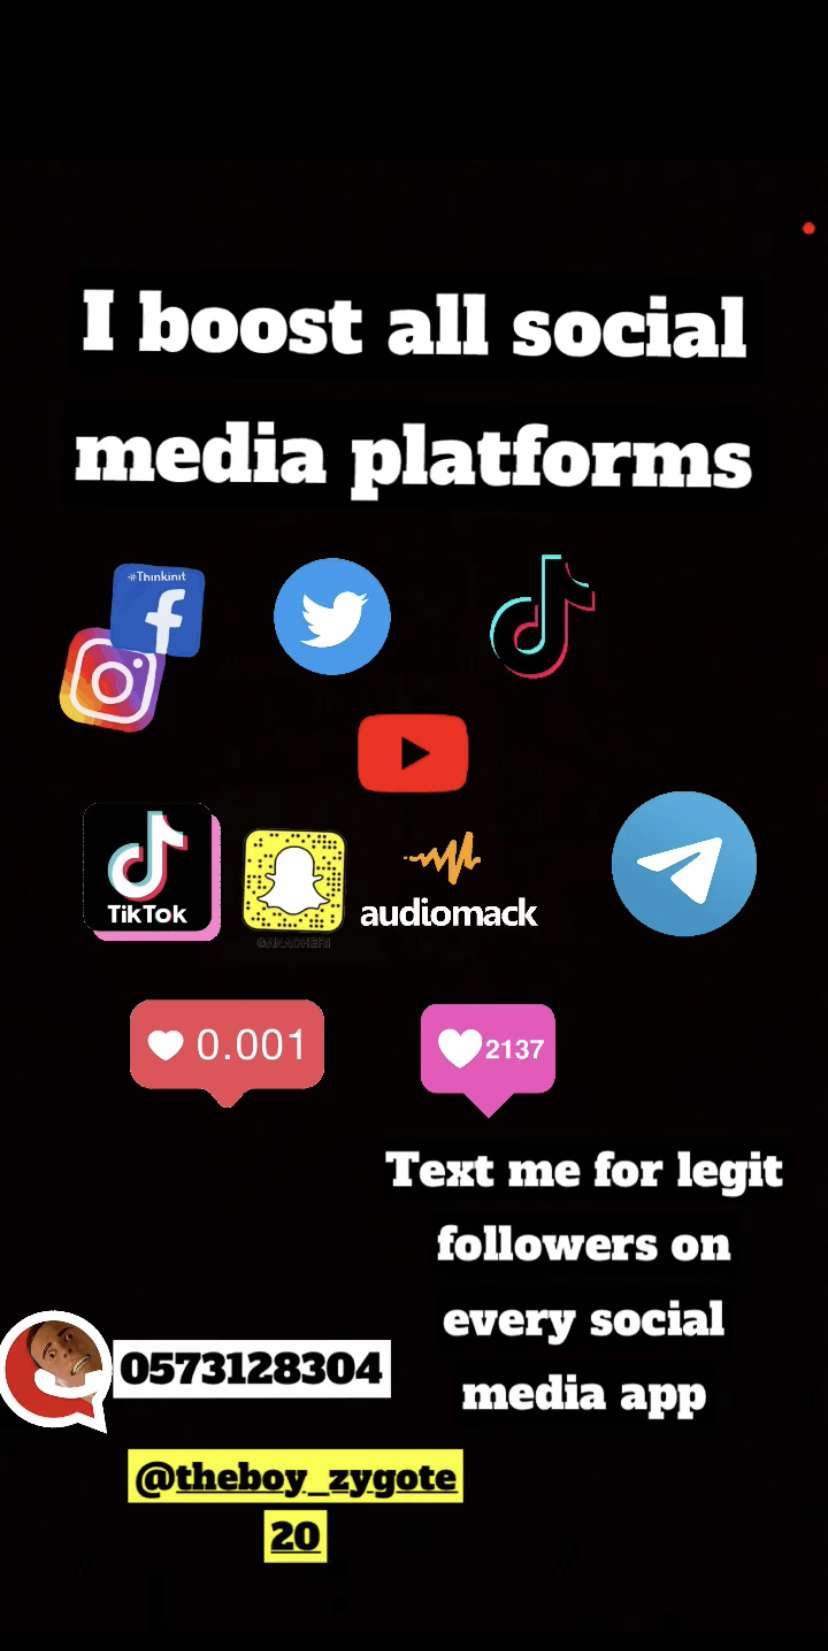 Boosting of all social media platforms